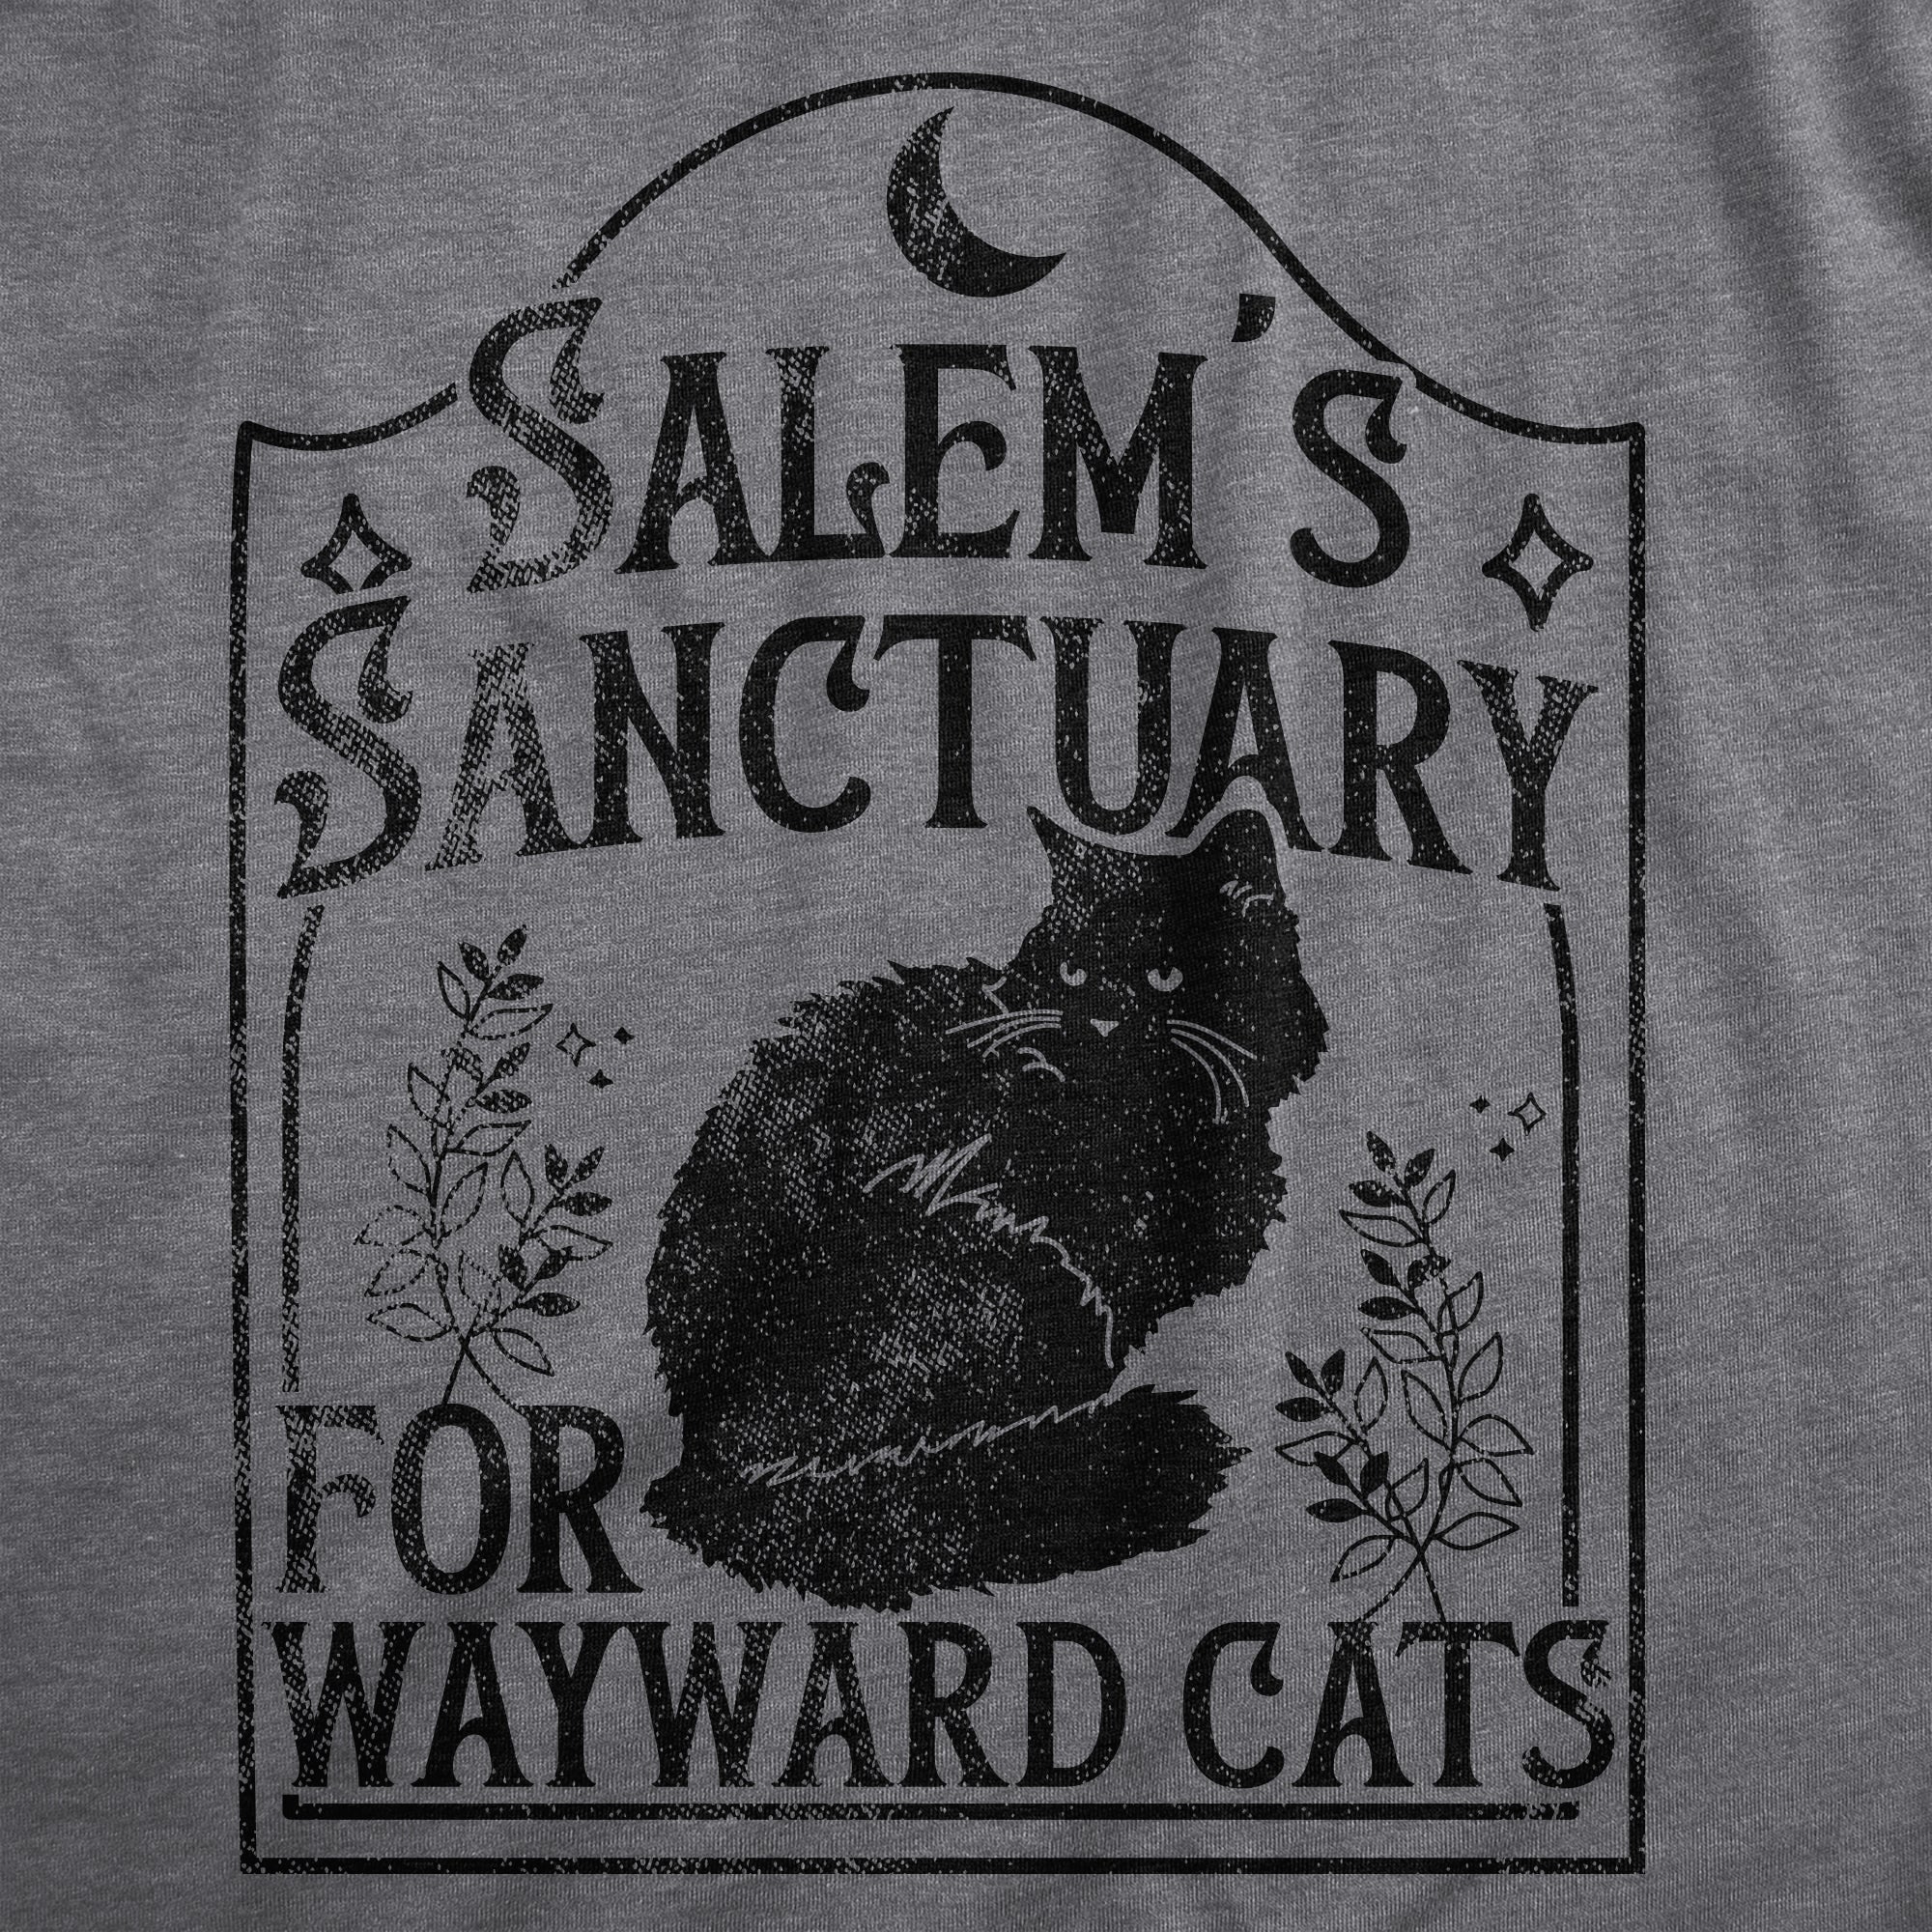 Funny Dark Heather Grey - SALEMS Salems Sanctuary For Wayward Cats Mens T Shirt Nerdy Halloween Cat Tee